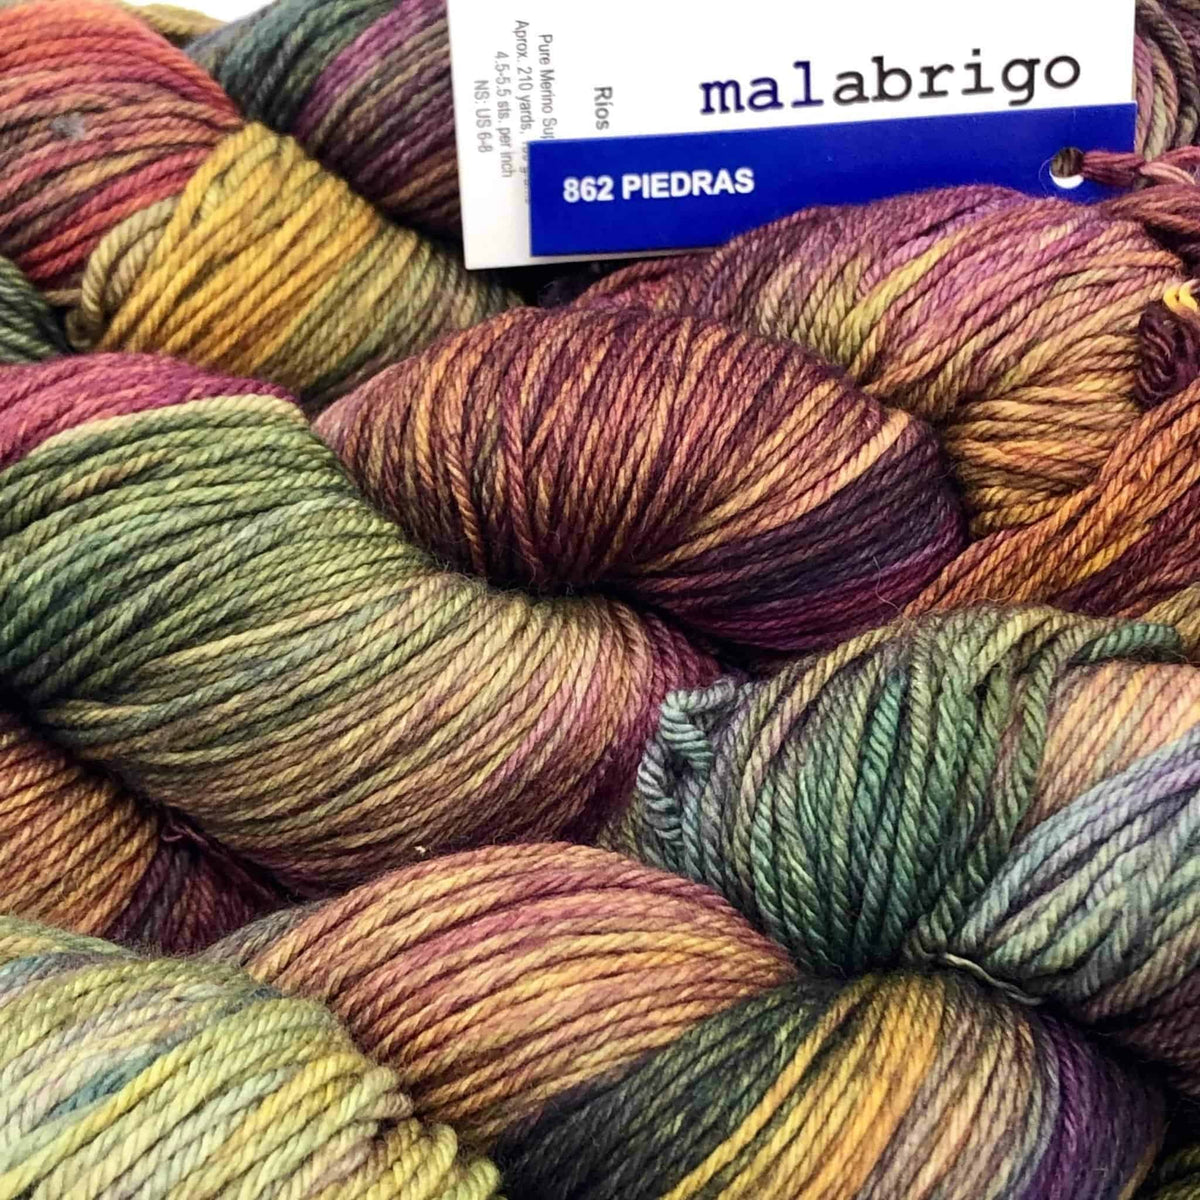 Malabrigo Rios Merino Wool Piedras 862 10Ply Aran Yarn